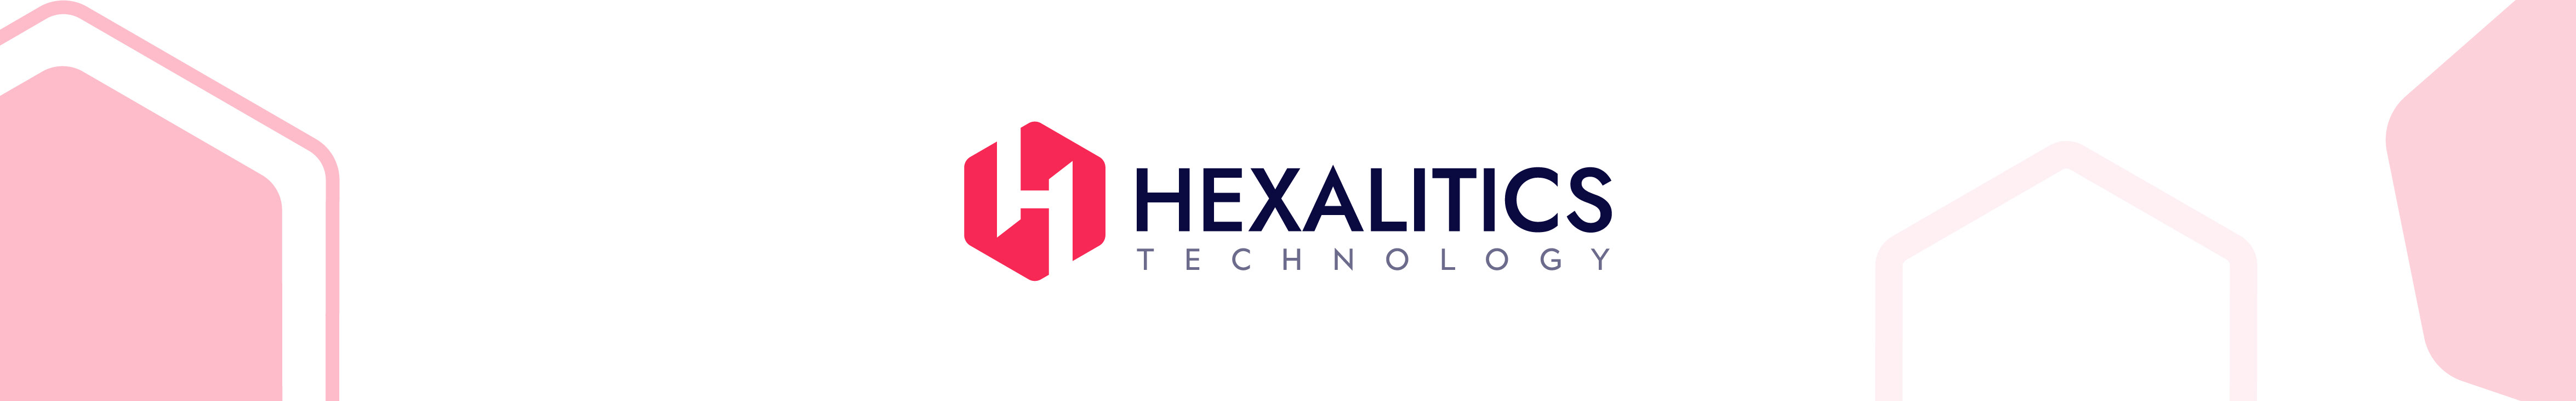 Hexalitics Technology's profile banner